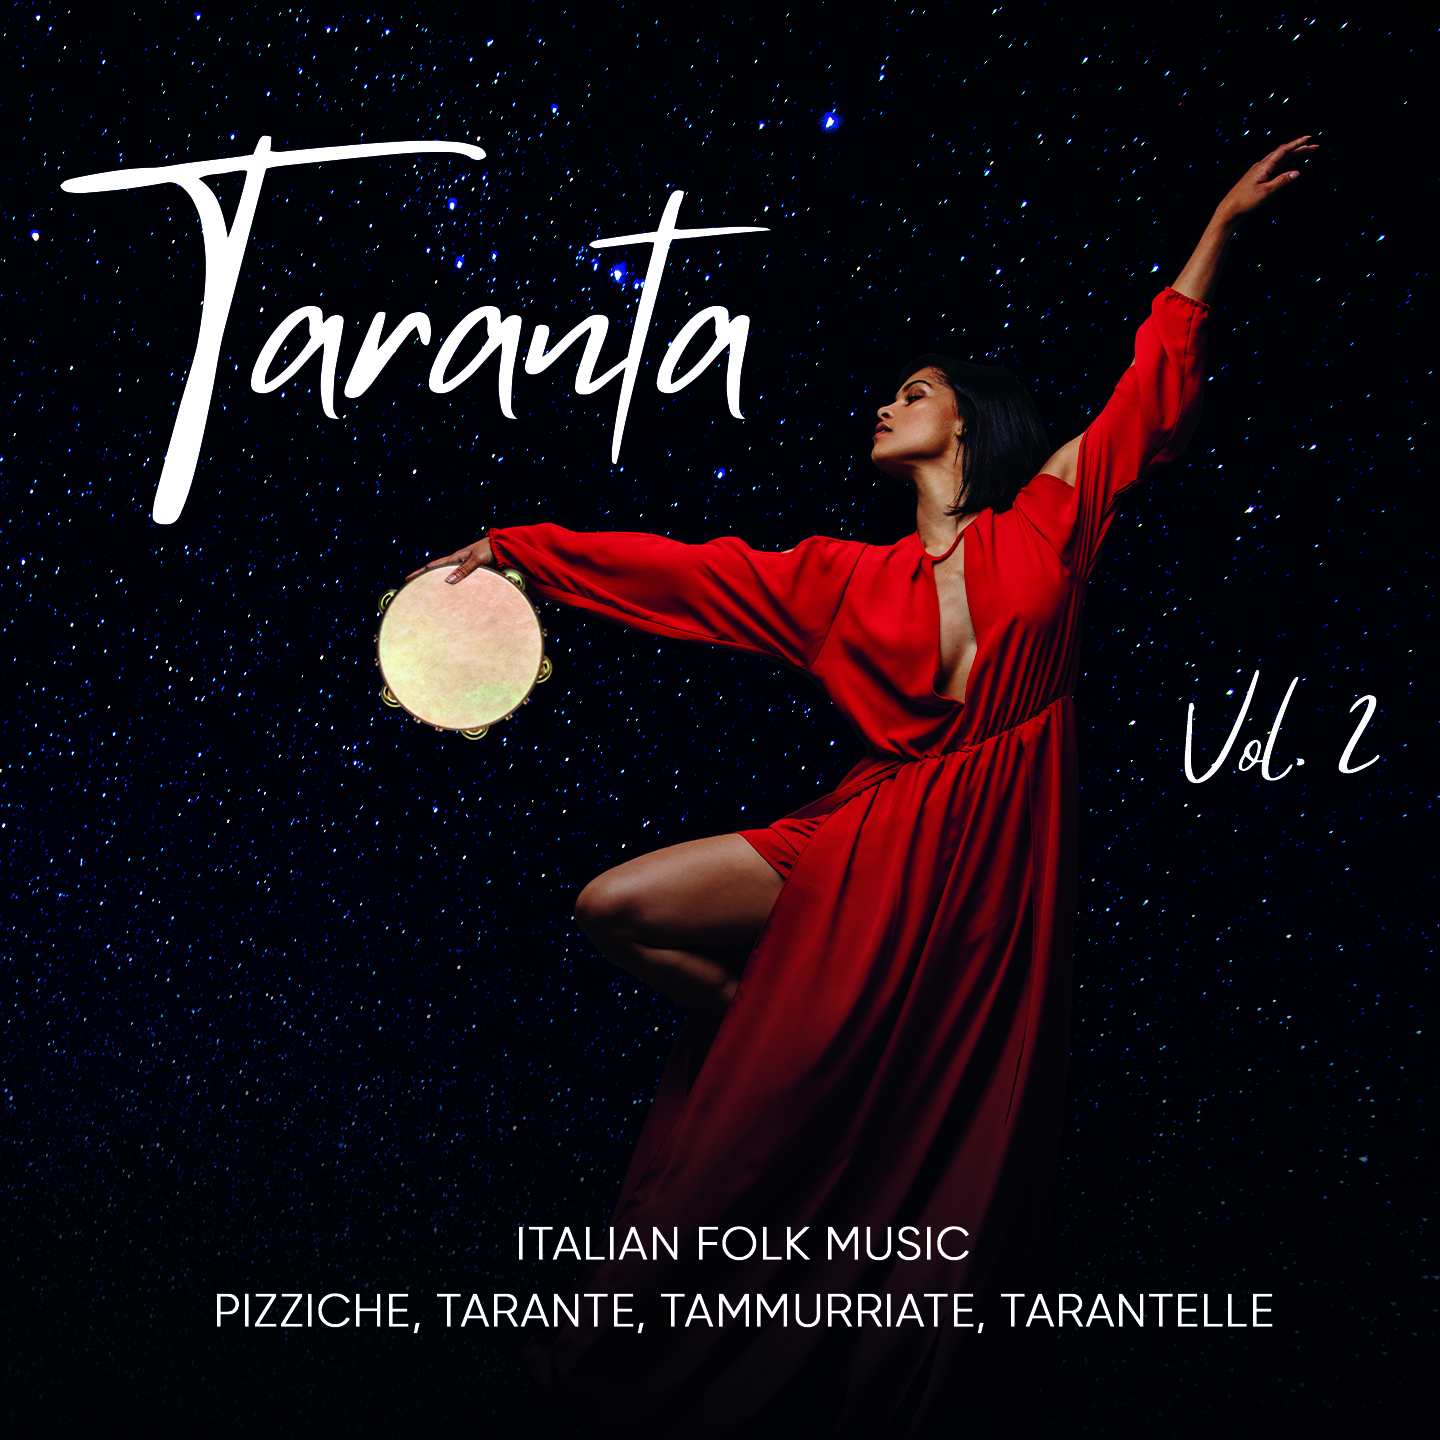 Taranta, Vol. 2 (Italian Folk Music: Pizziche, Tarante, Tamurriate, Tarantelle)